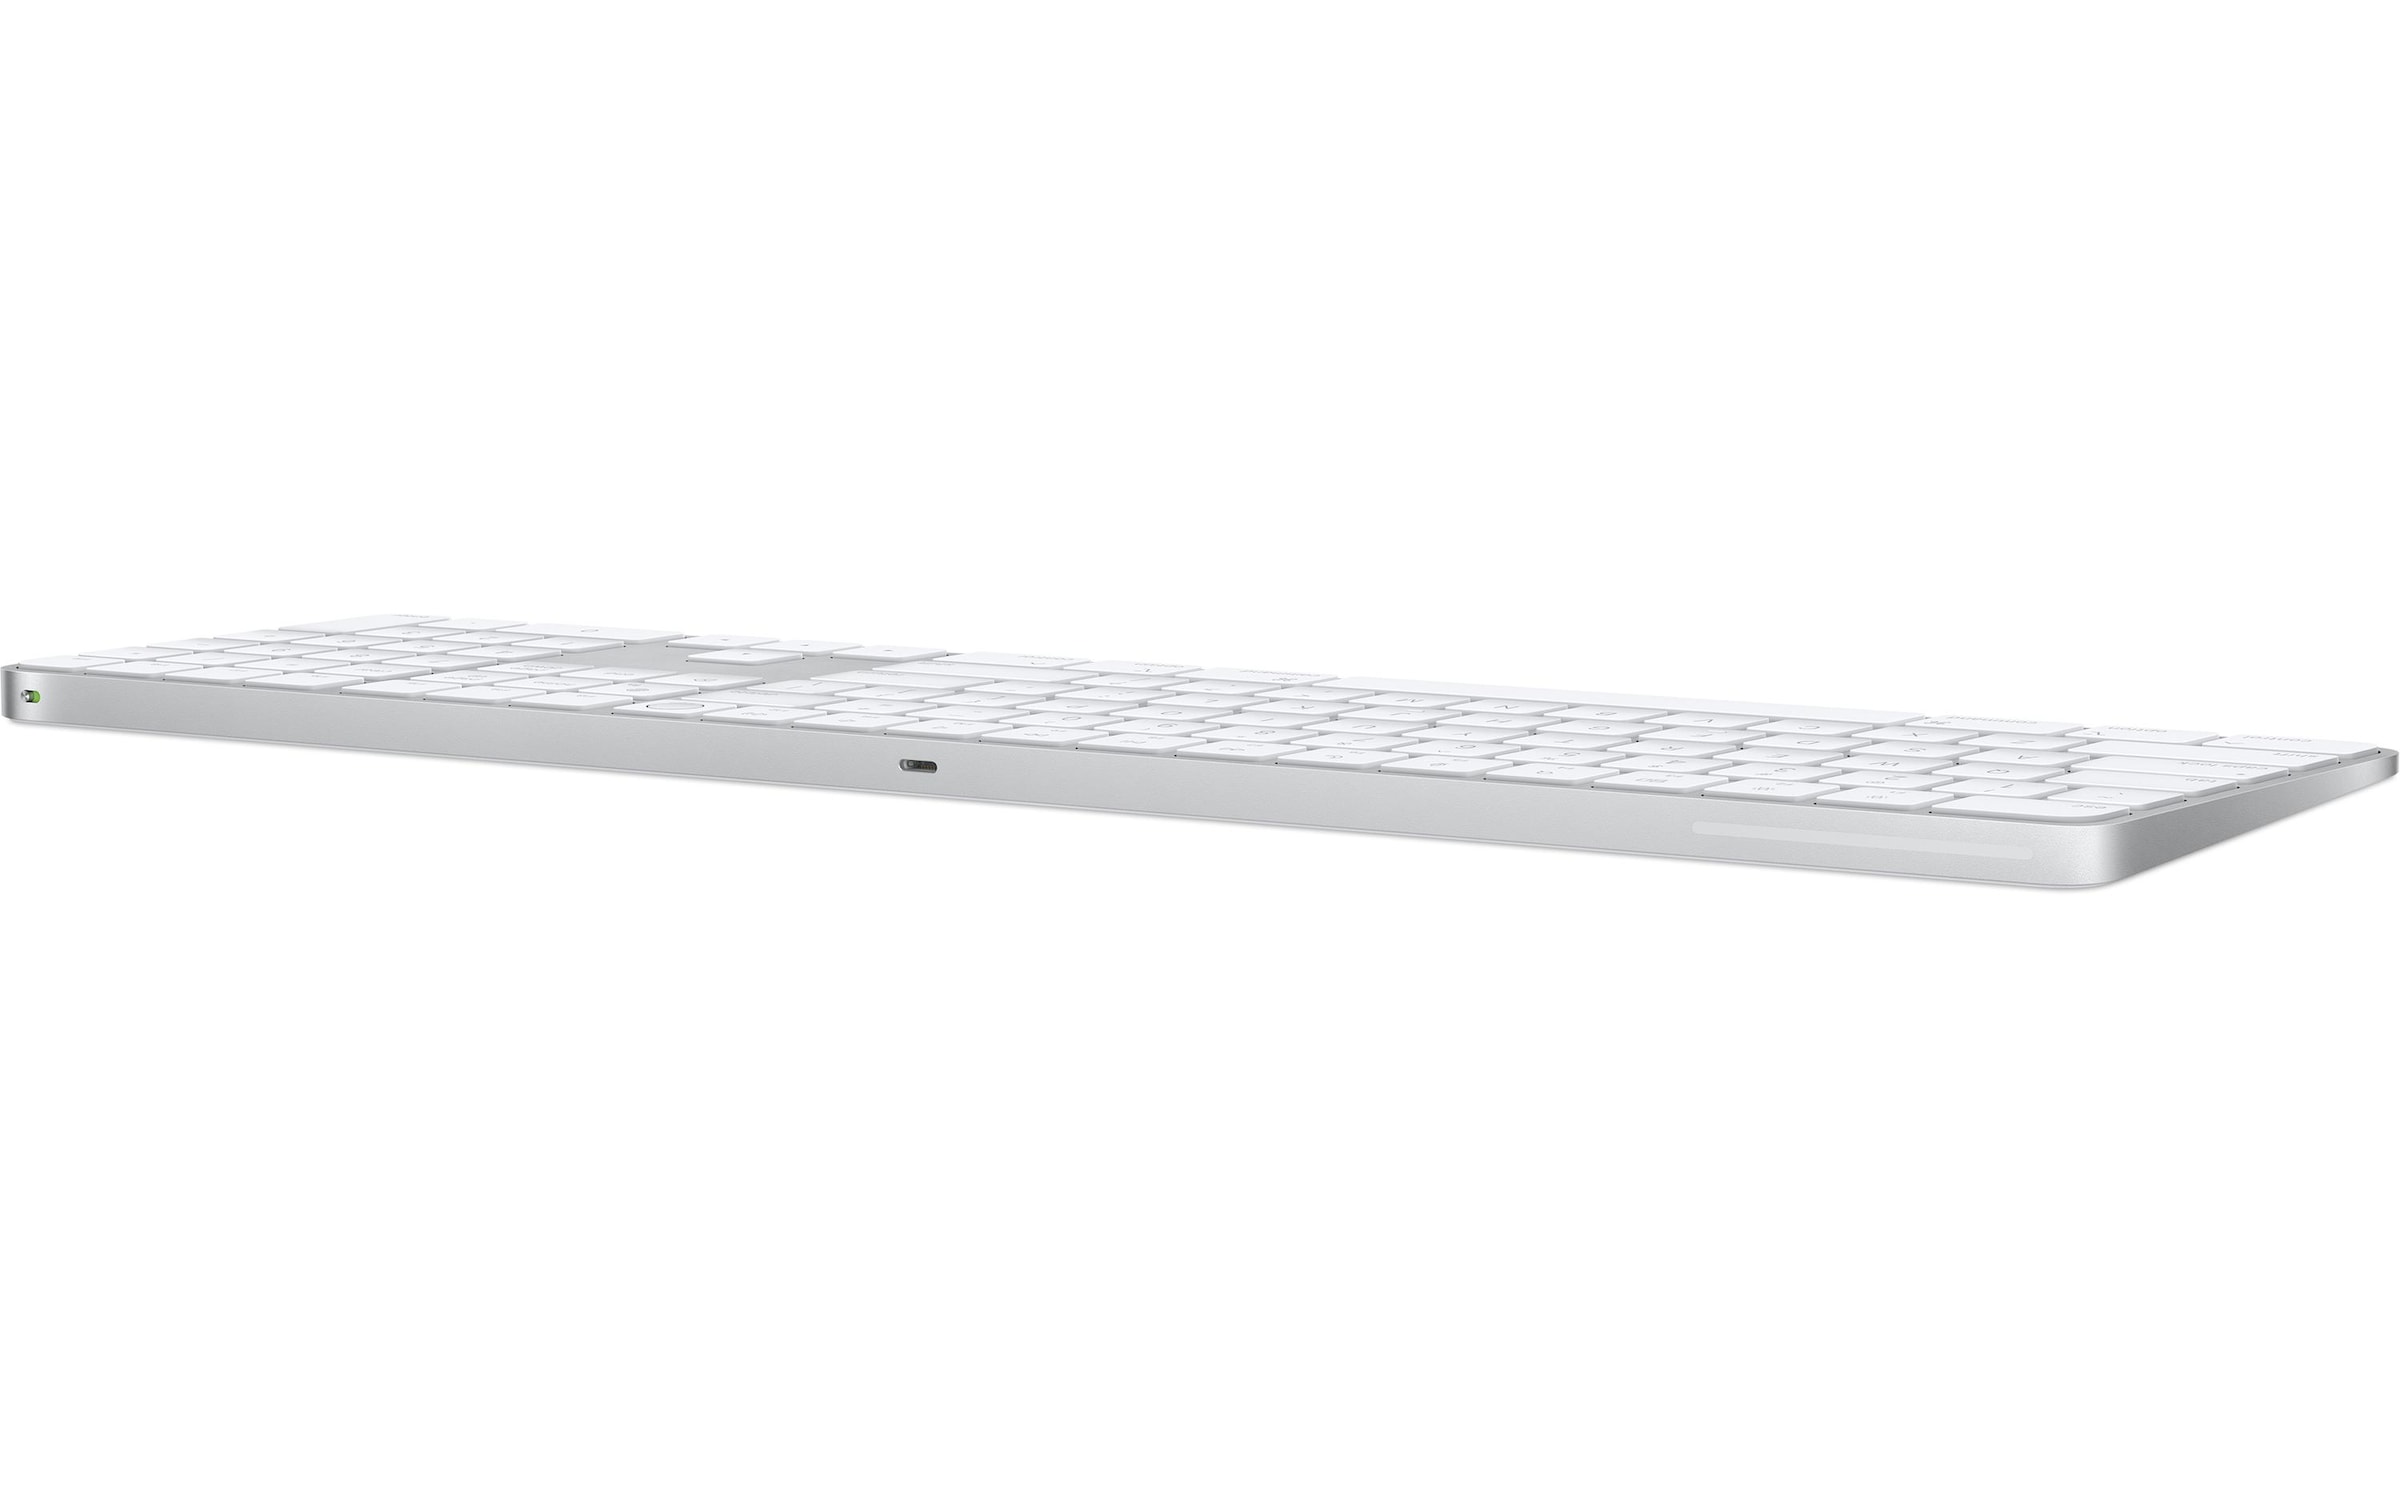 Apple Keyboard »Keyboard mit Touch ID«